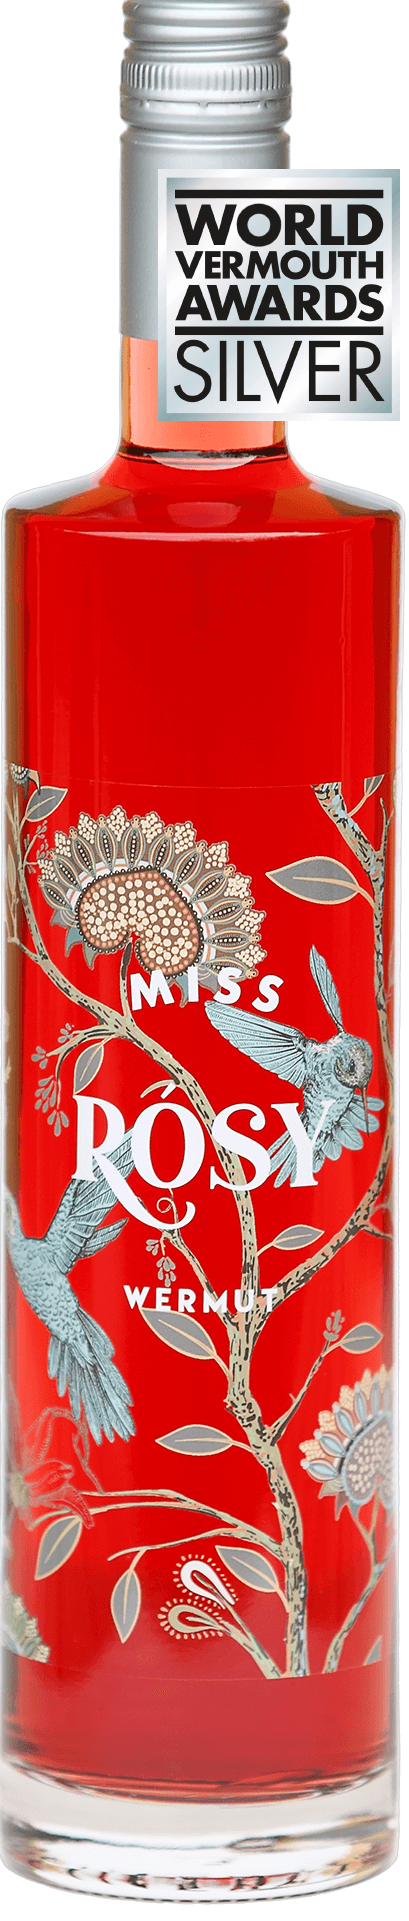 Miss Rósy Rosé